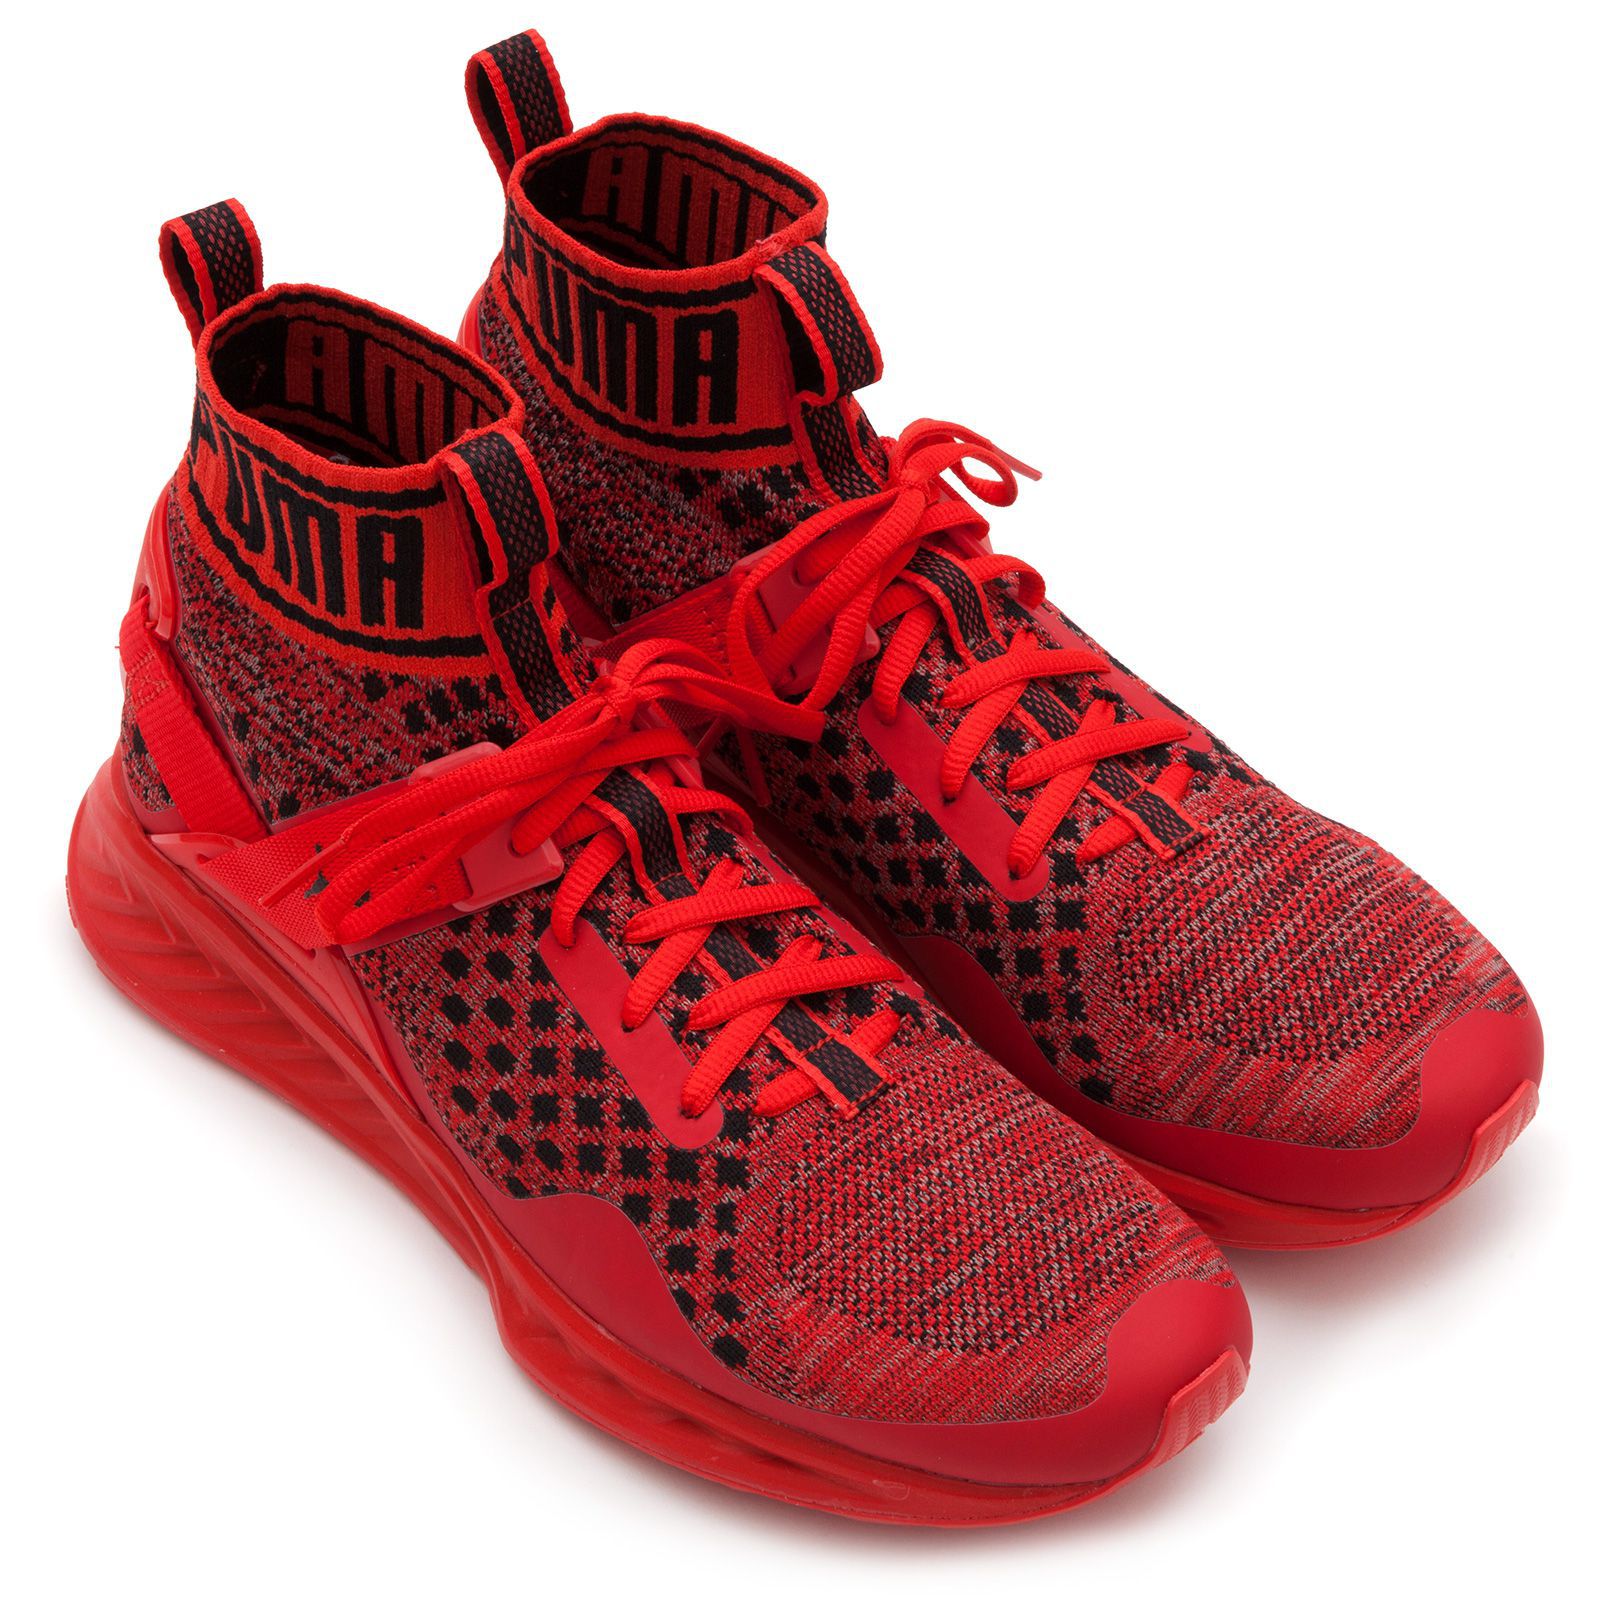 Puma Ignite Evoknit Red Running Shoes - Buy Puma Ignite Evoknit Red ...